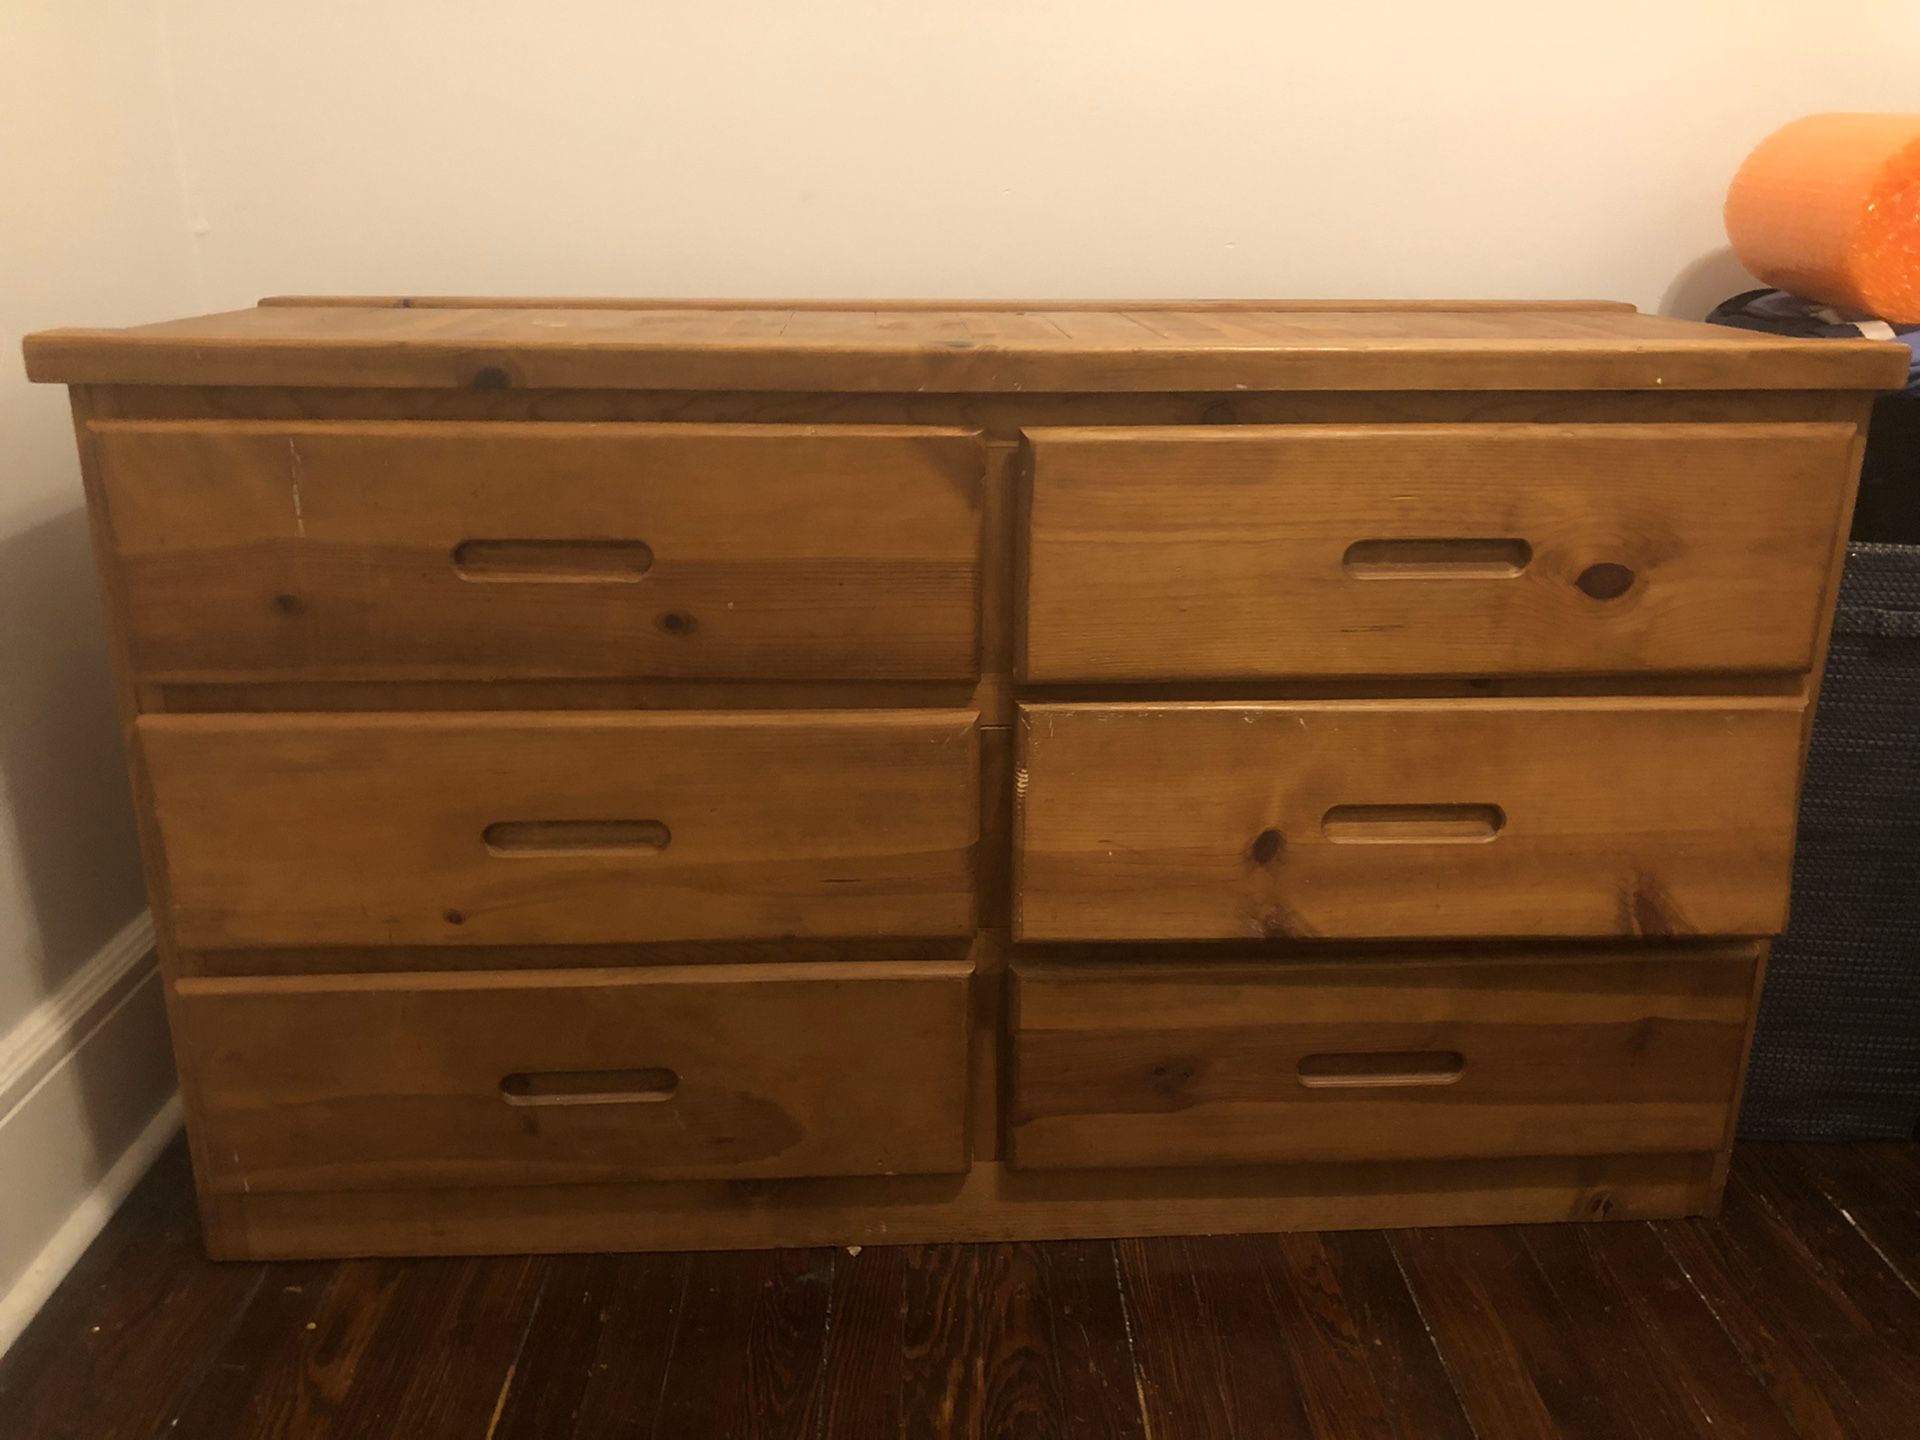 Bassett Wooden Chest & dresser - $300